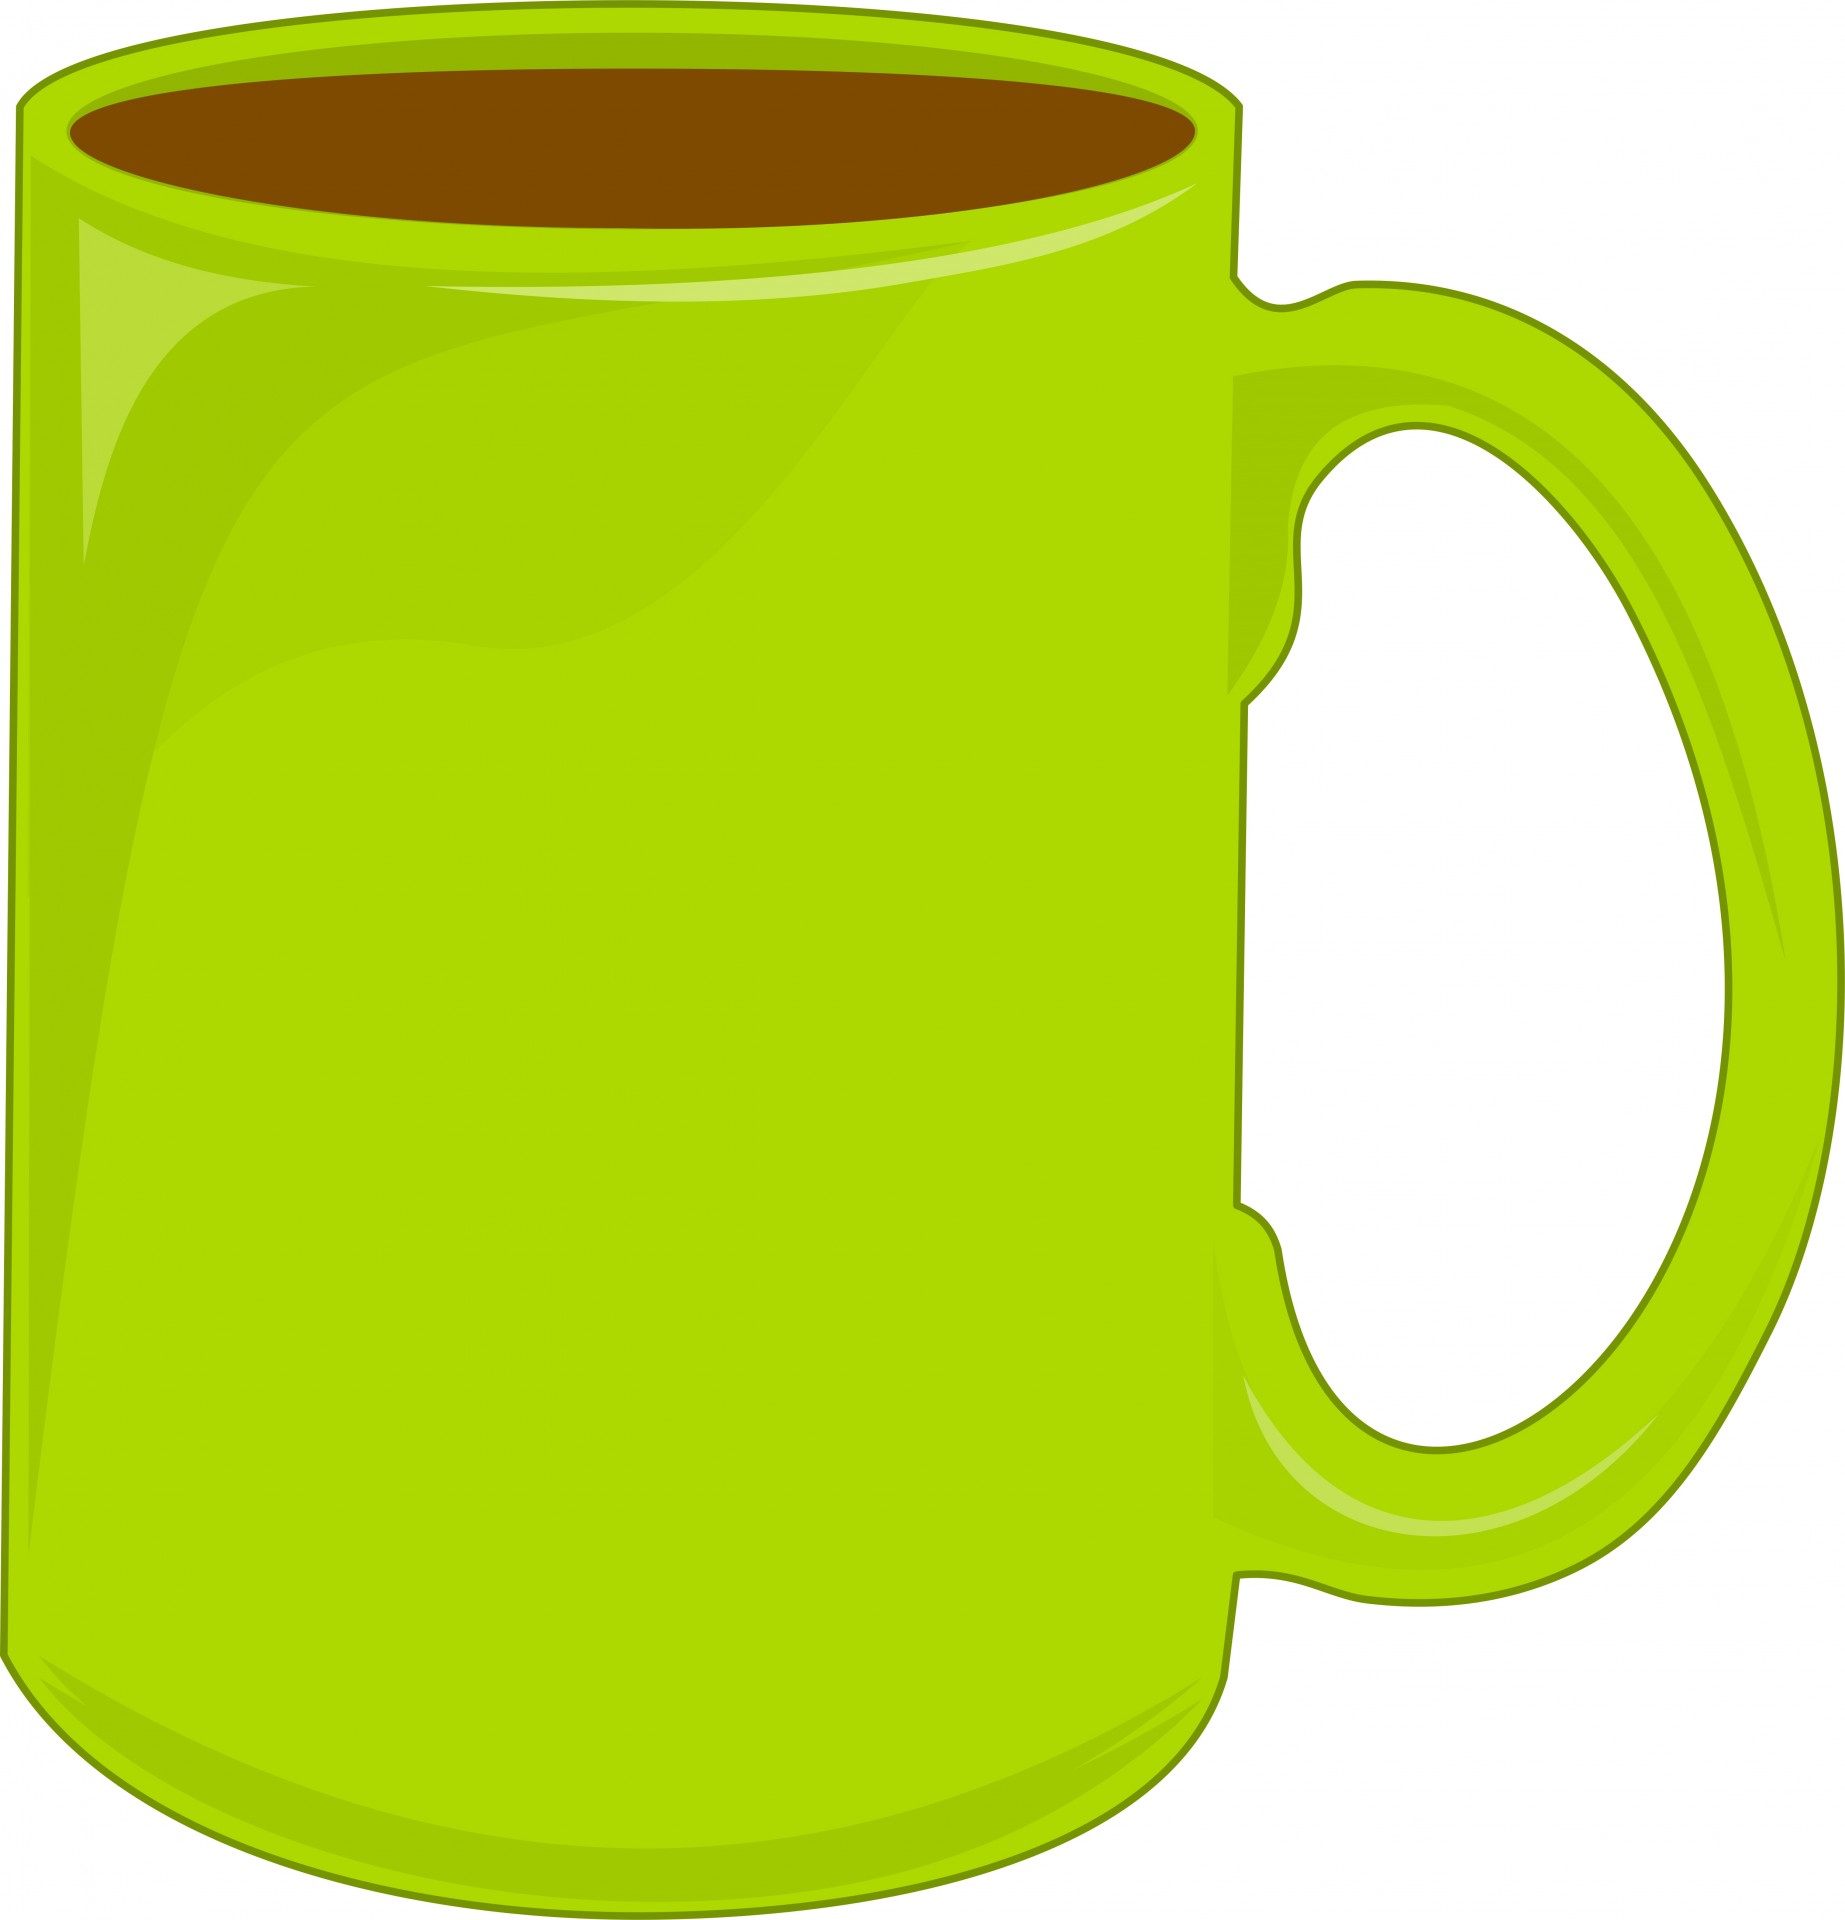 mug green cup free photo